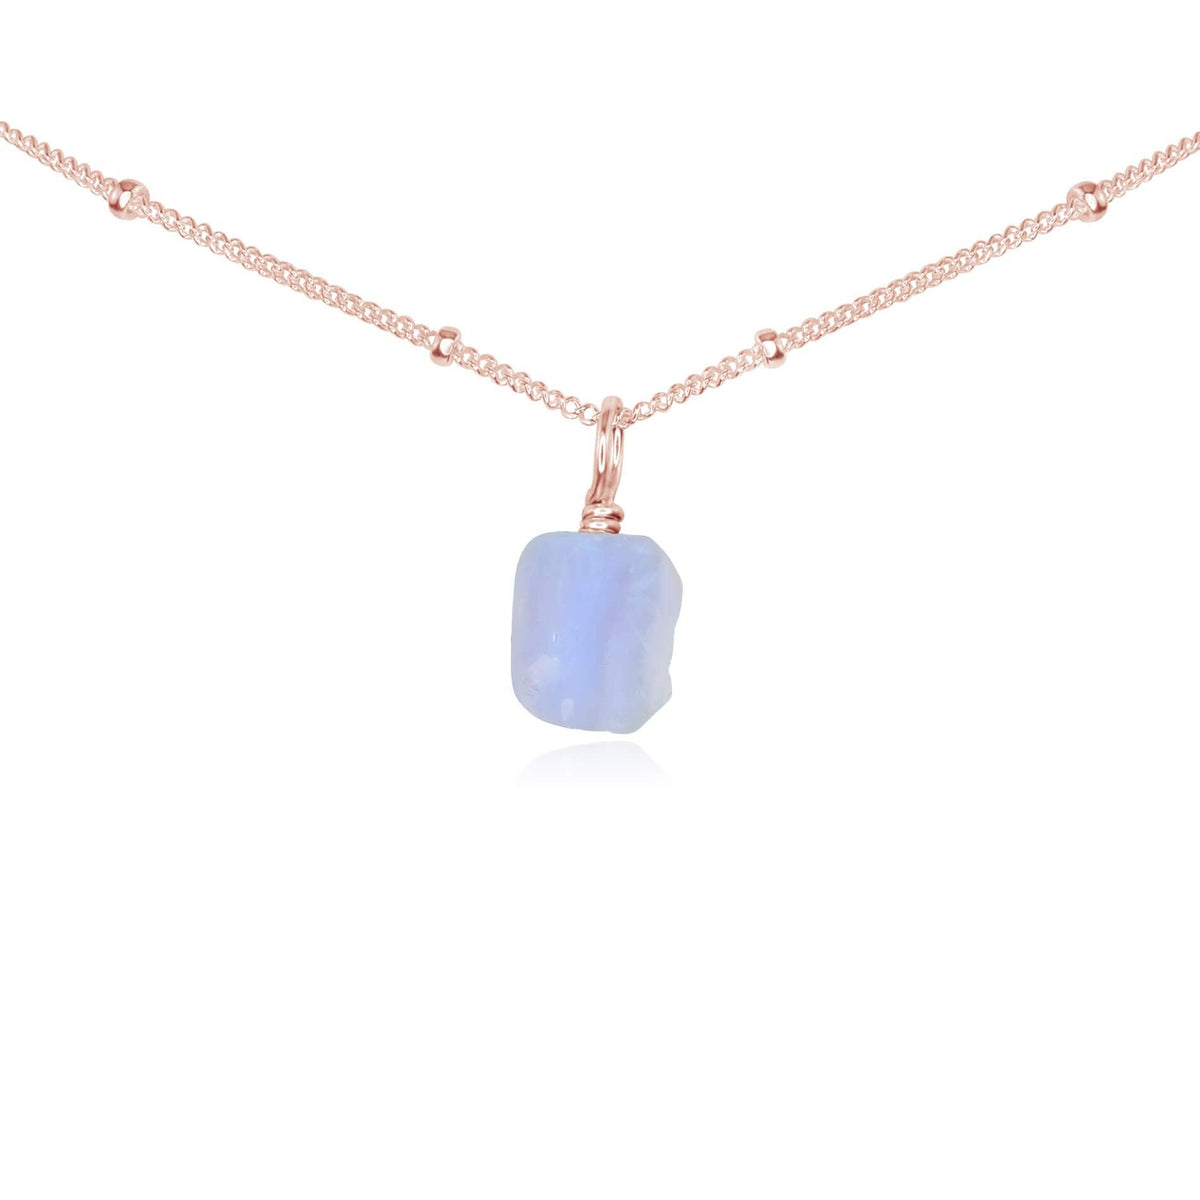 Tiny Rough Blue Lace Agate Gemstone Pendant Choker - Tiny Rough Blue Lace Agate Gemstone Pendant Choker - 14k Rose Gold Fill / Satellite - Luna Tide Handmade Crystal Jewellery